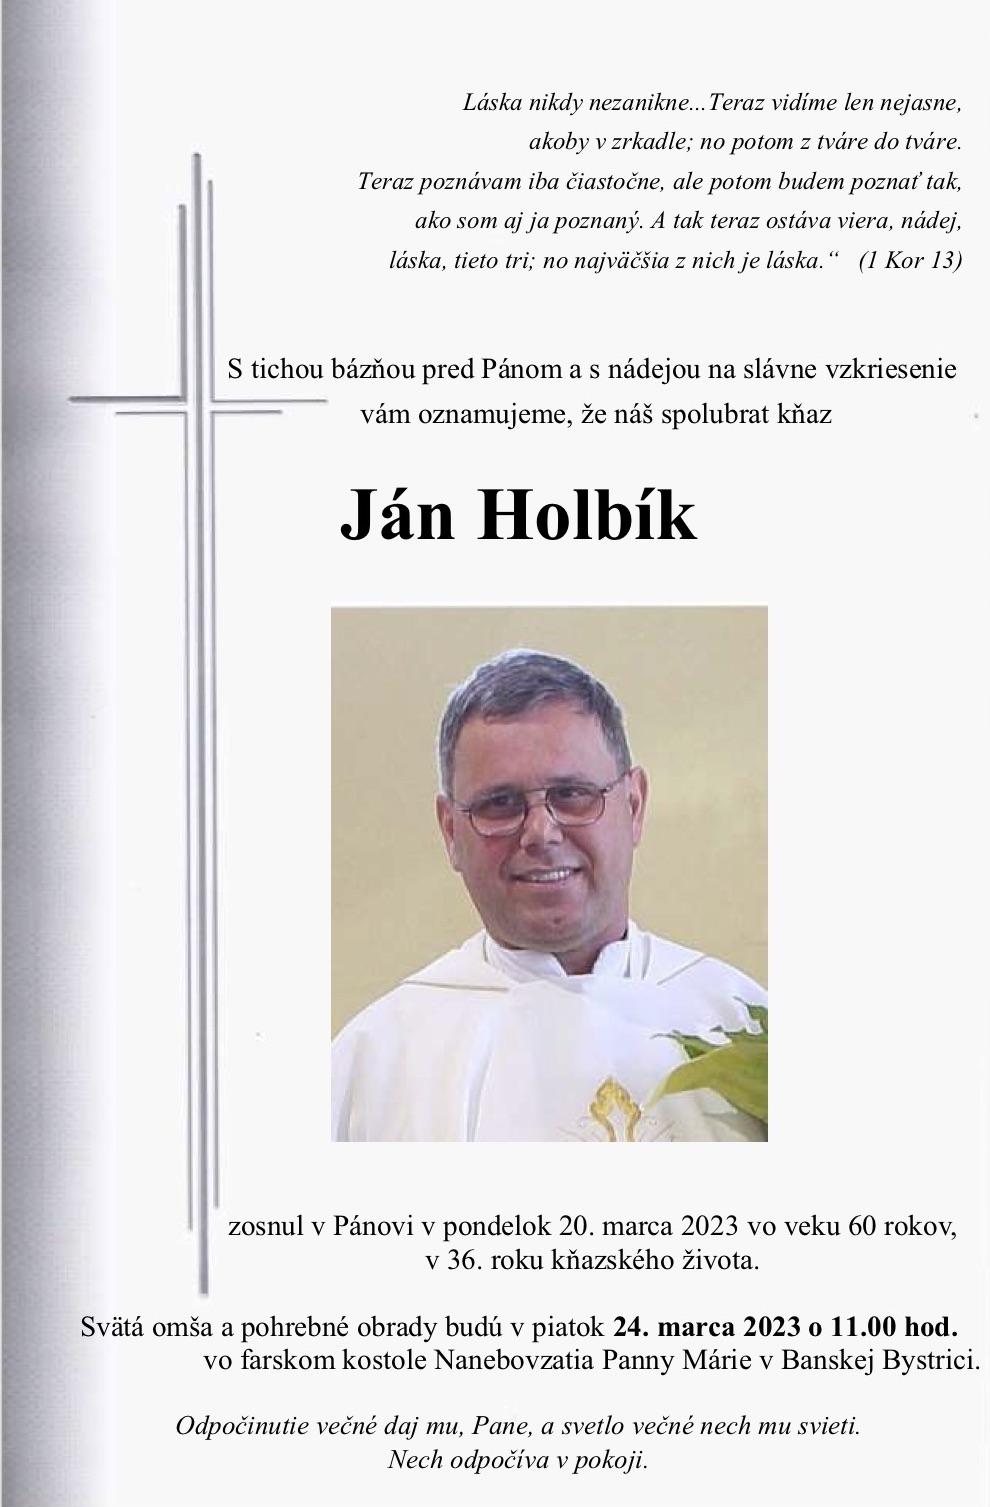 Jan Holbik, knaz, umrtie, parte